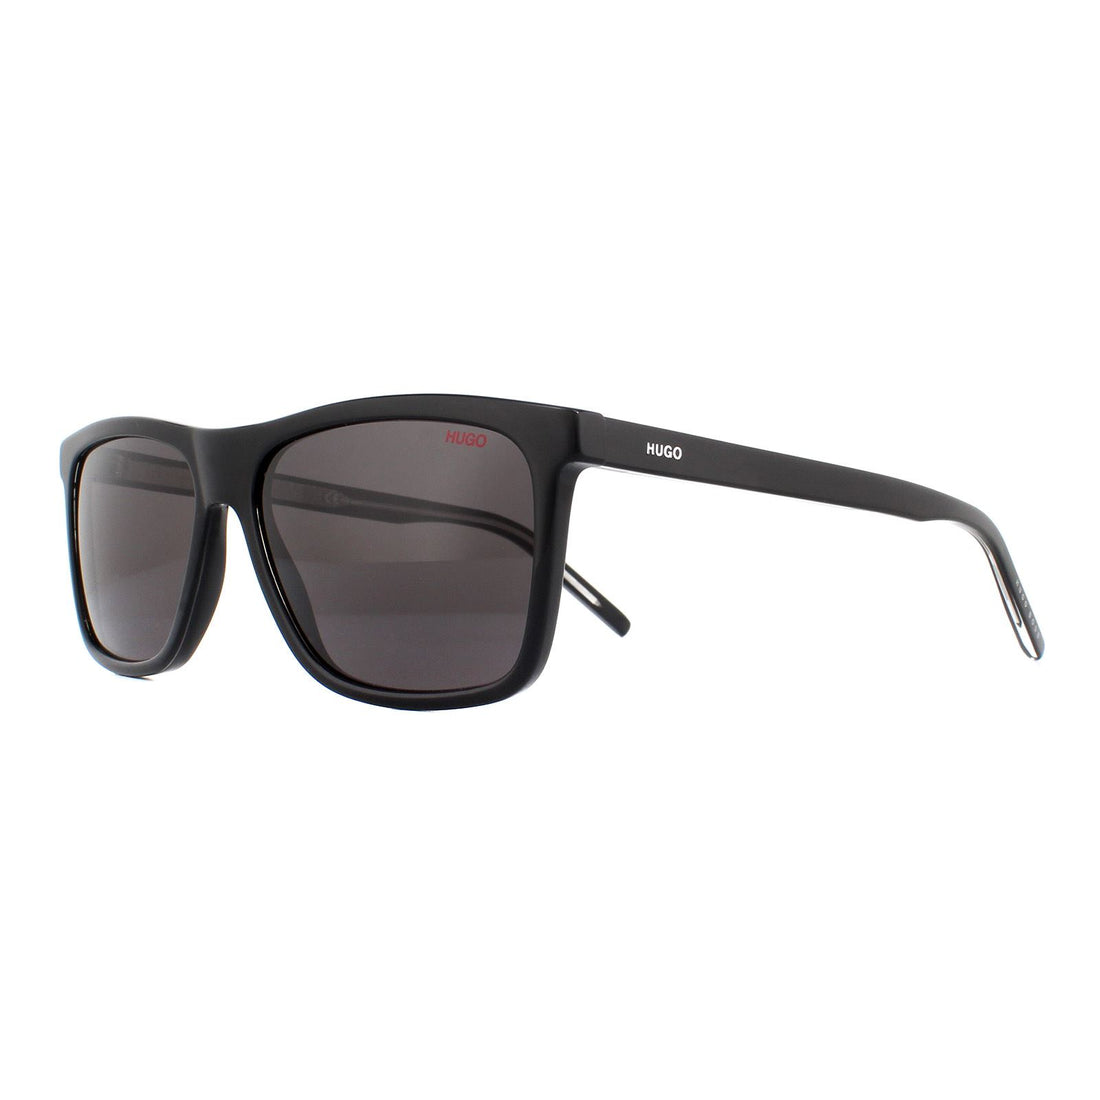 Hugo by Hugo Boss Sunglasses 1003/S 7C5 IR Black Crystal Grey